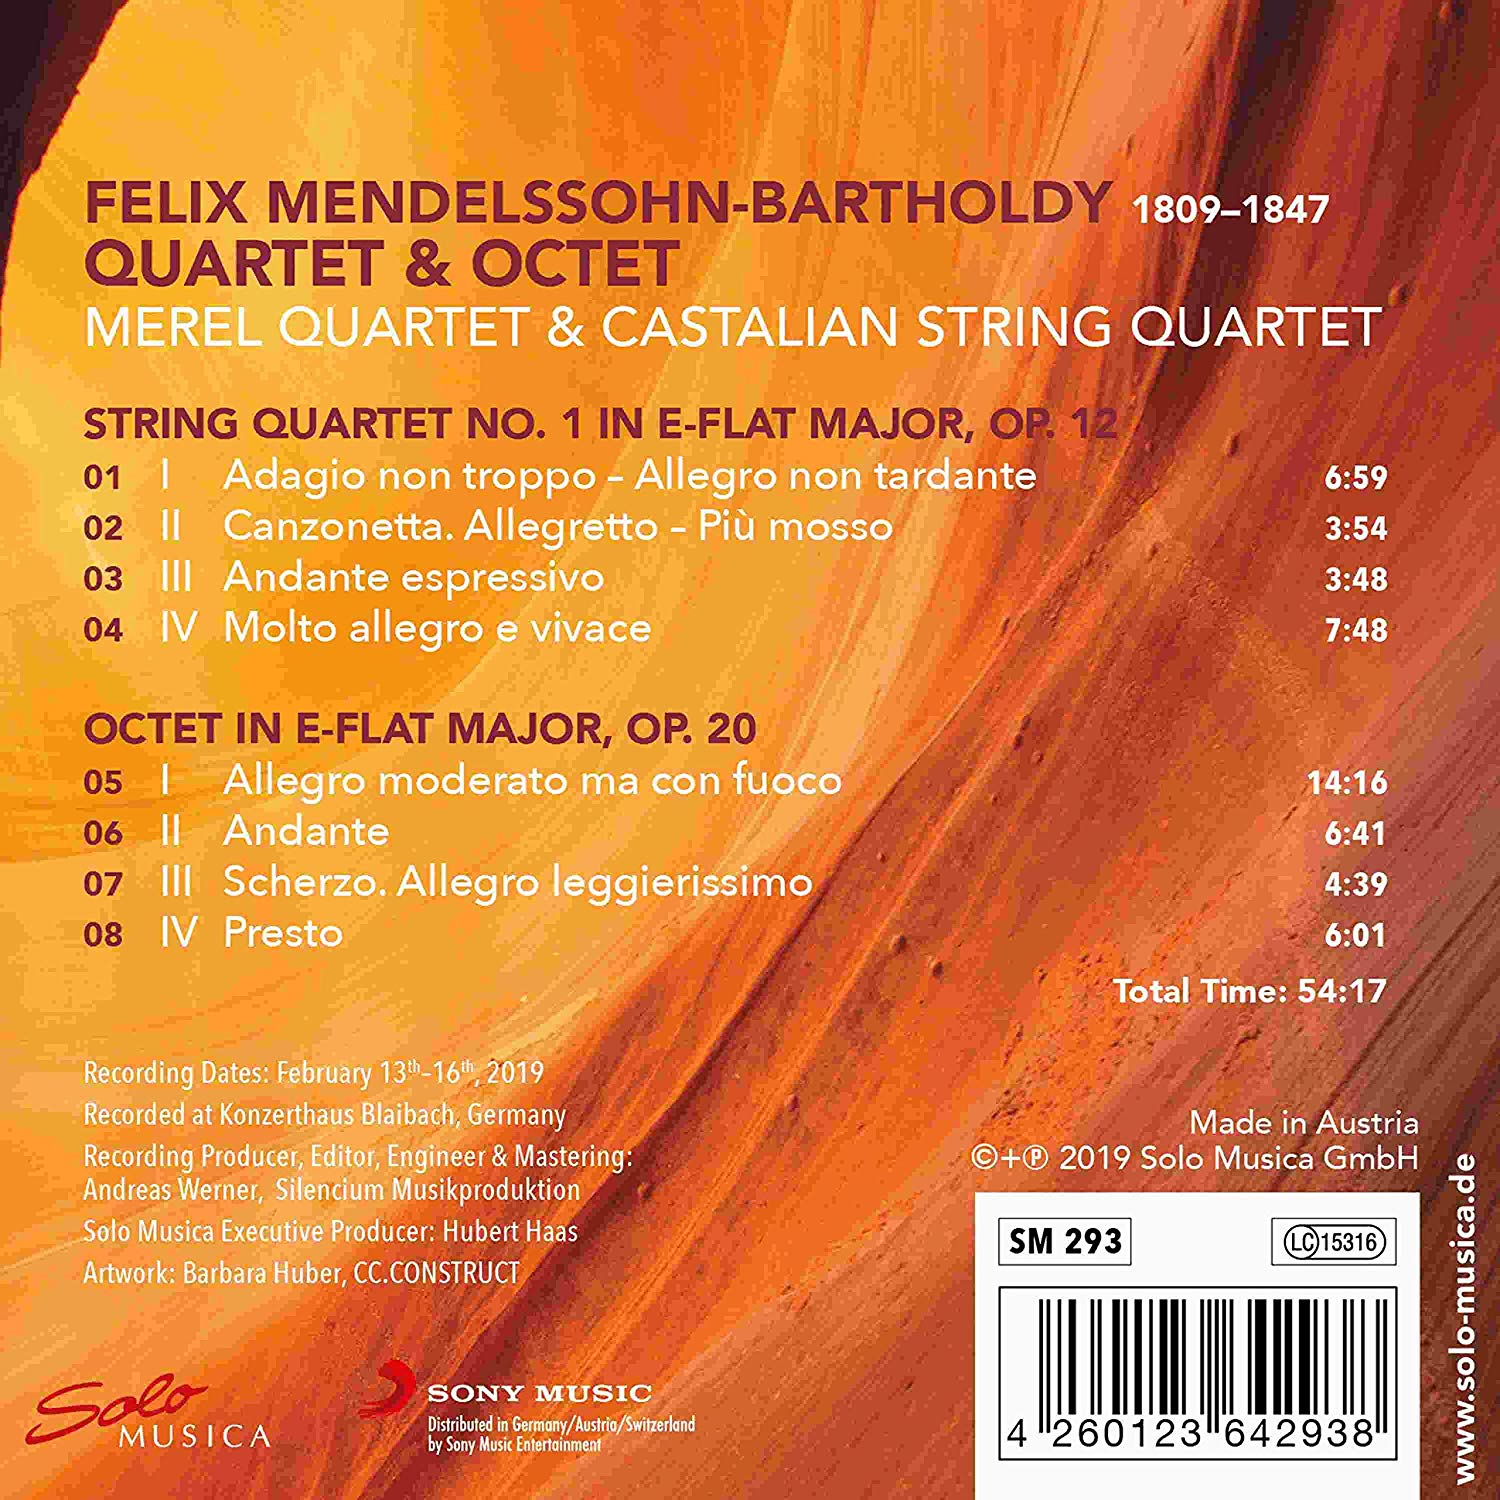 Merel Quartet 멘델스존: 현악사중주, 현악팔중주 (Mendelssohn: Octet & Quartet)